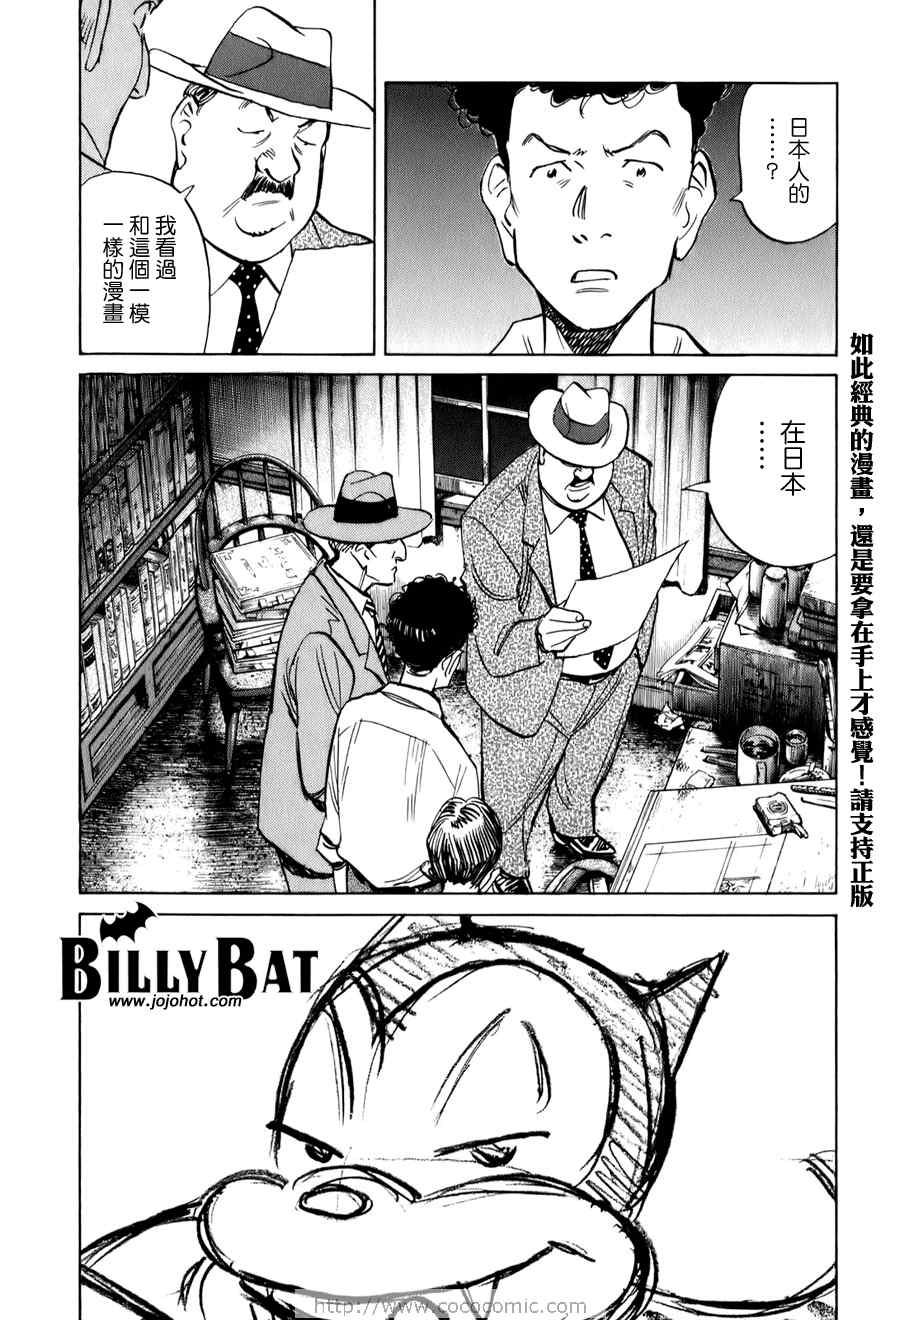 Billy_Bat - 第2話 - 4